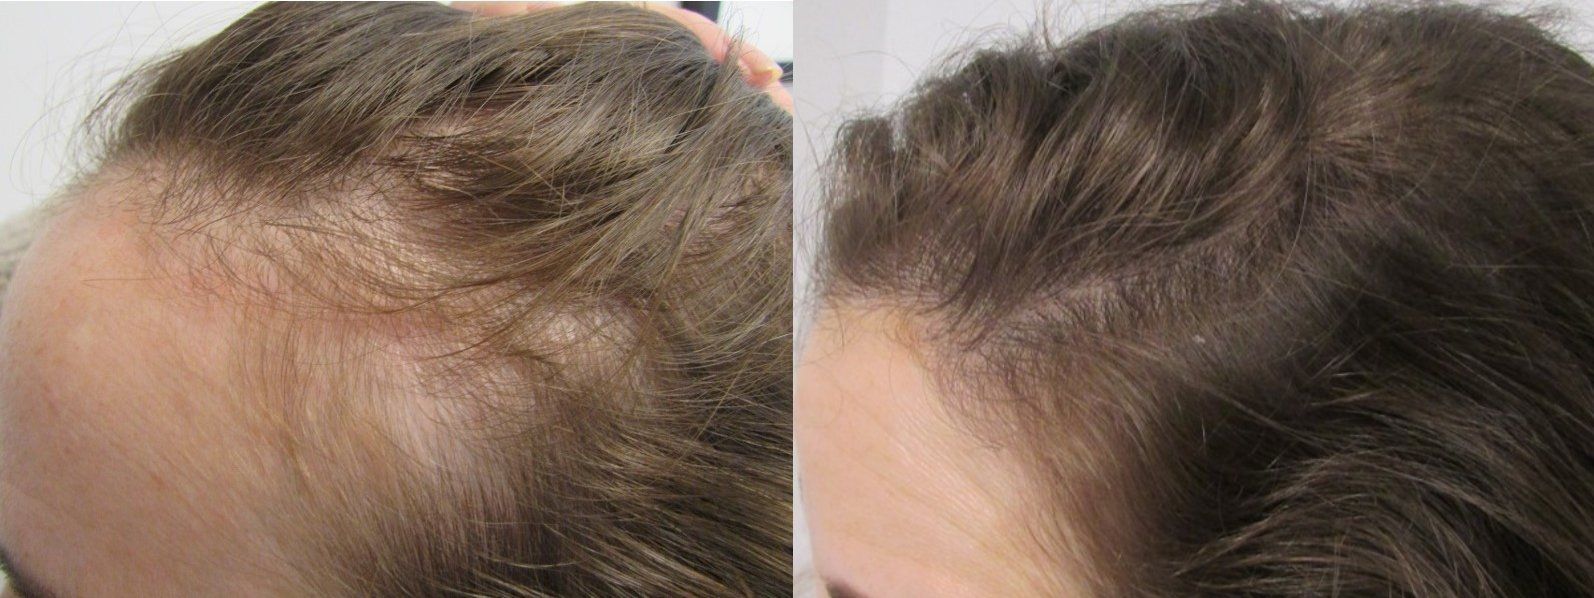 Telogen effluvium and androgenetic alopecia